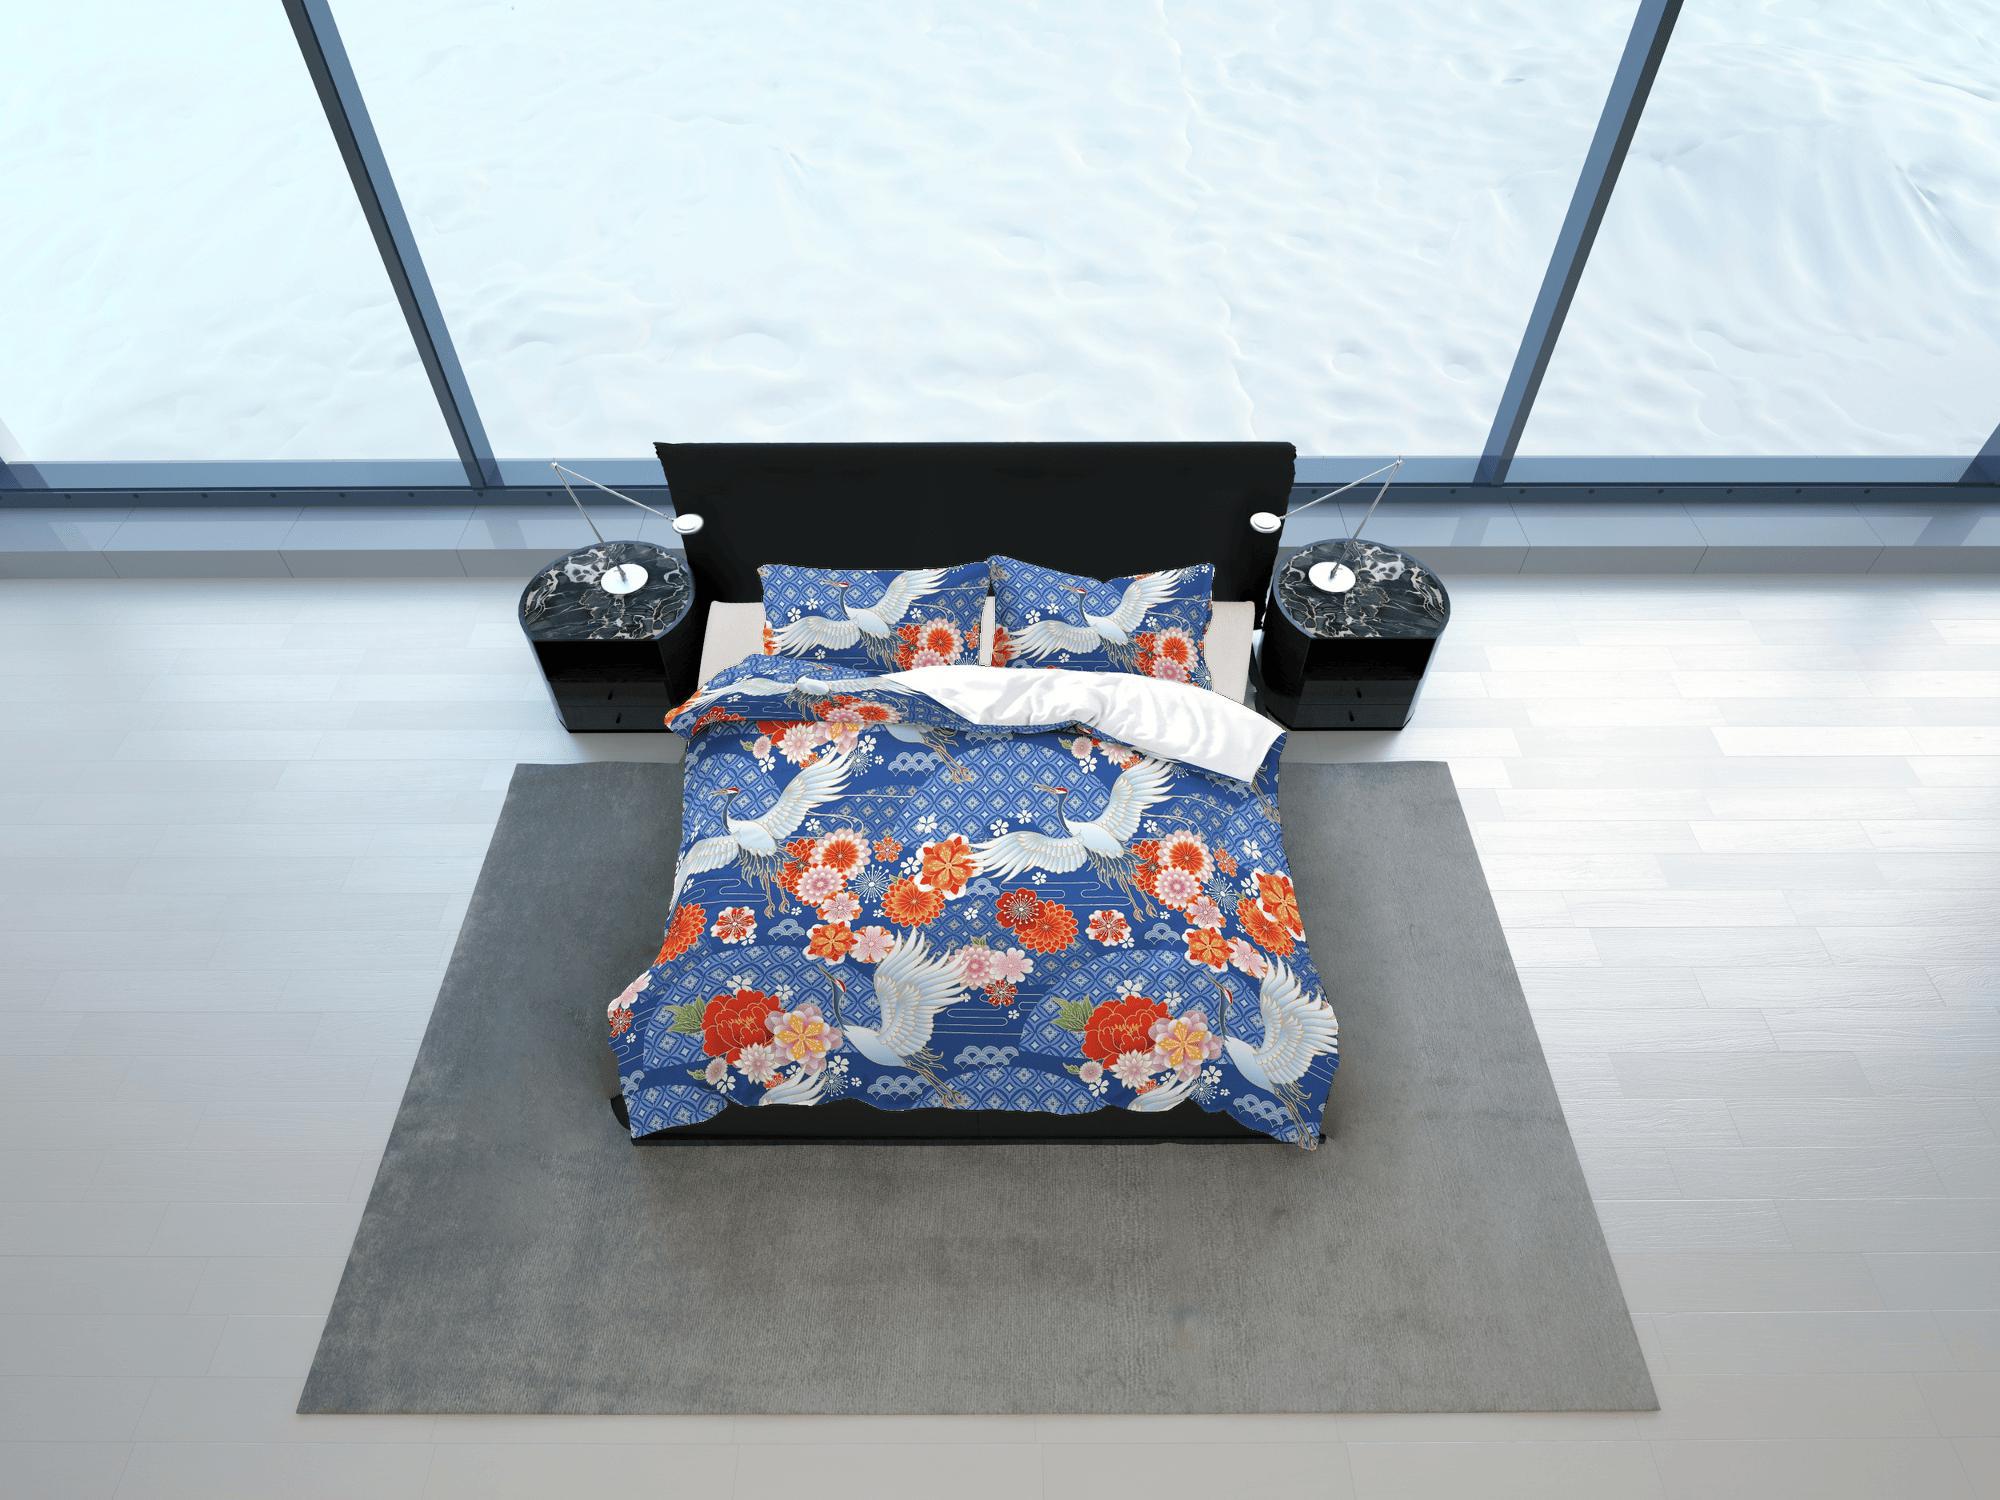 daintyduvet Japanese Blue Duvet Cover Set, Floral Kimono Design Bedding Set with Pillow Cover Case